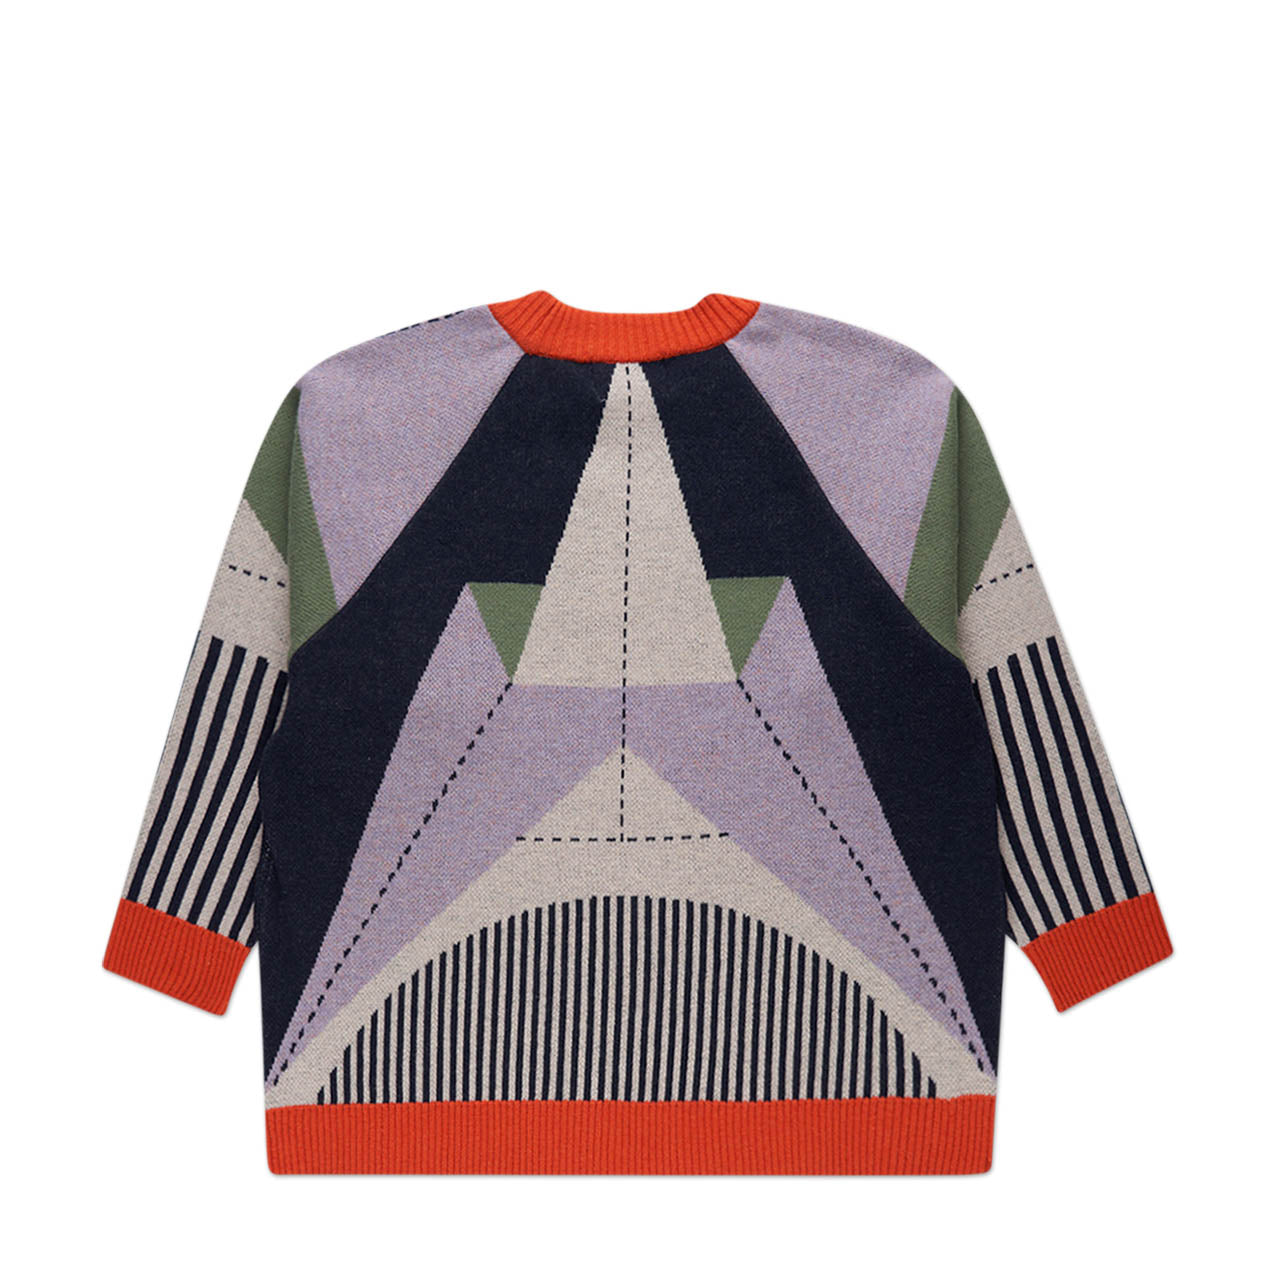 henrik vibskov paper plane sweatshirt (lavender)